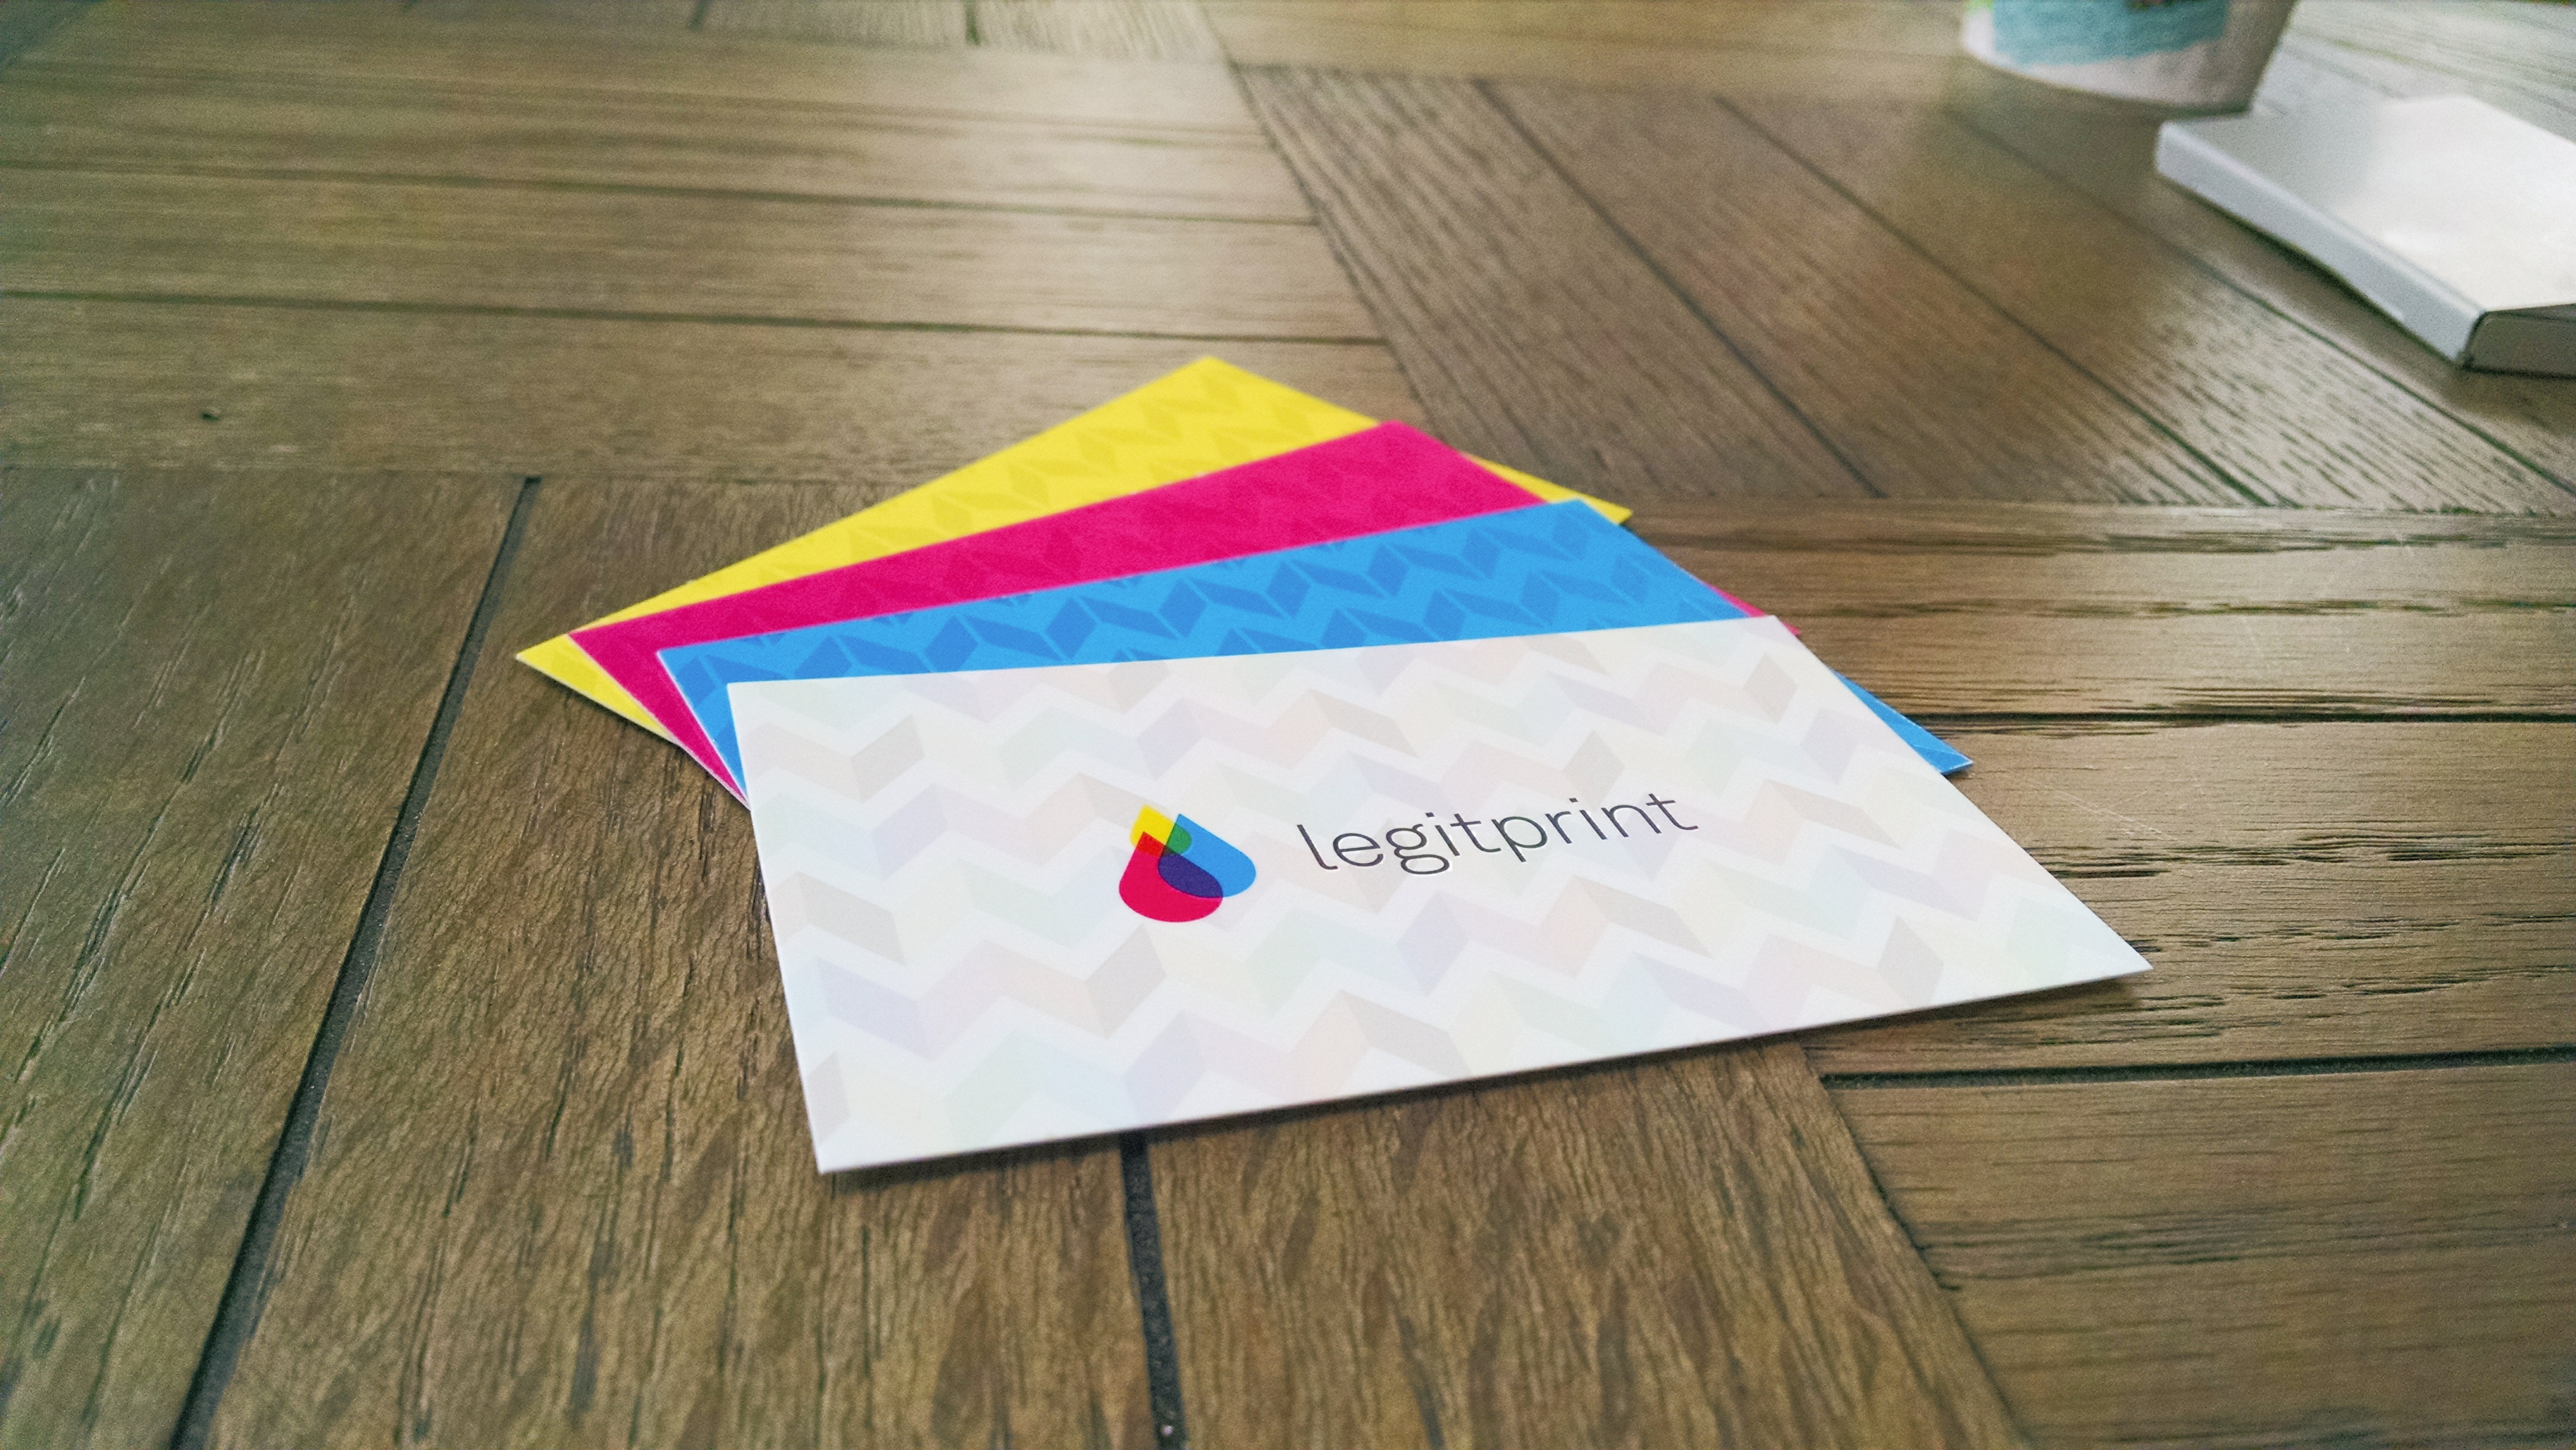 Legit Print Reveals New Branding and Micro Legit Kits